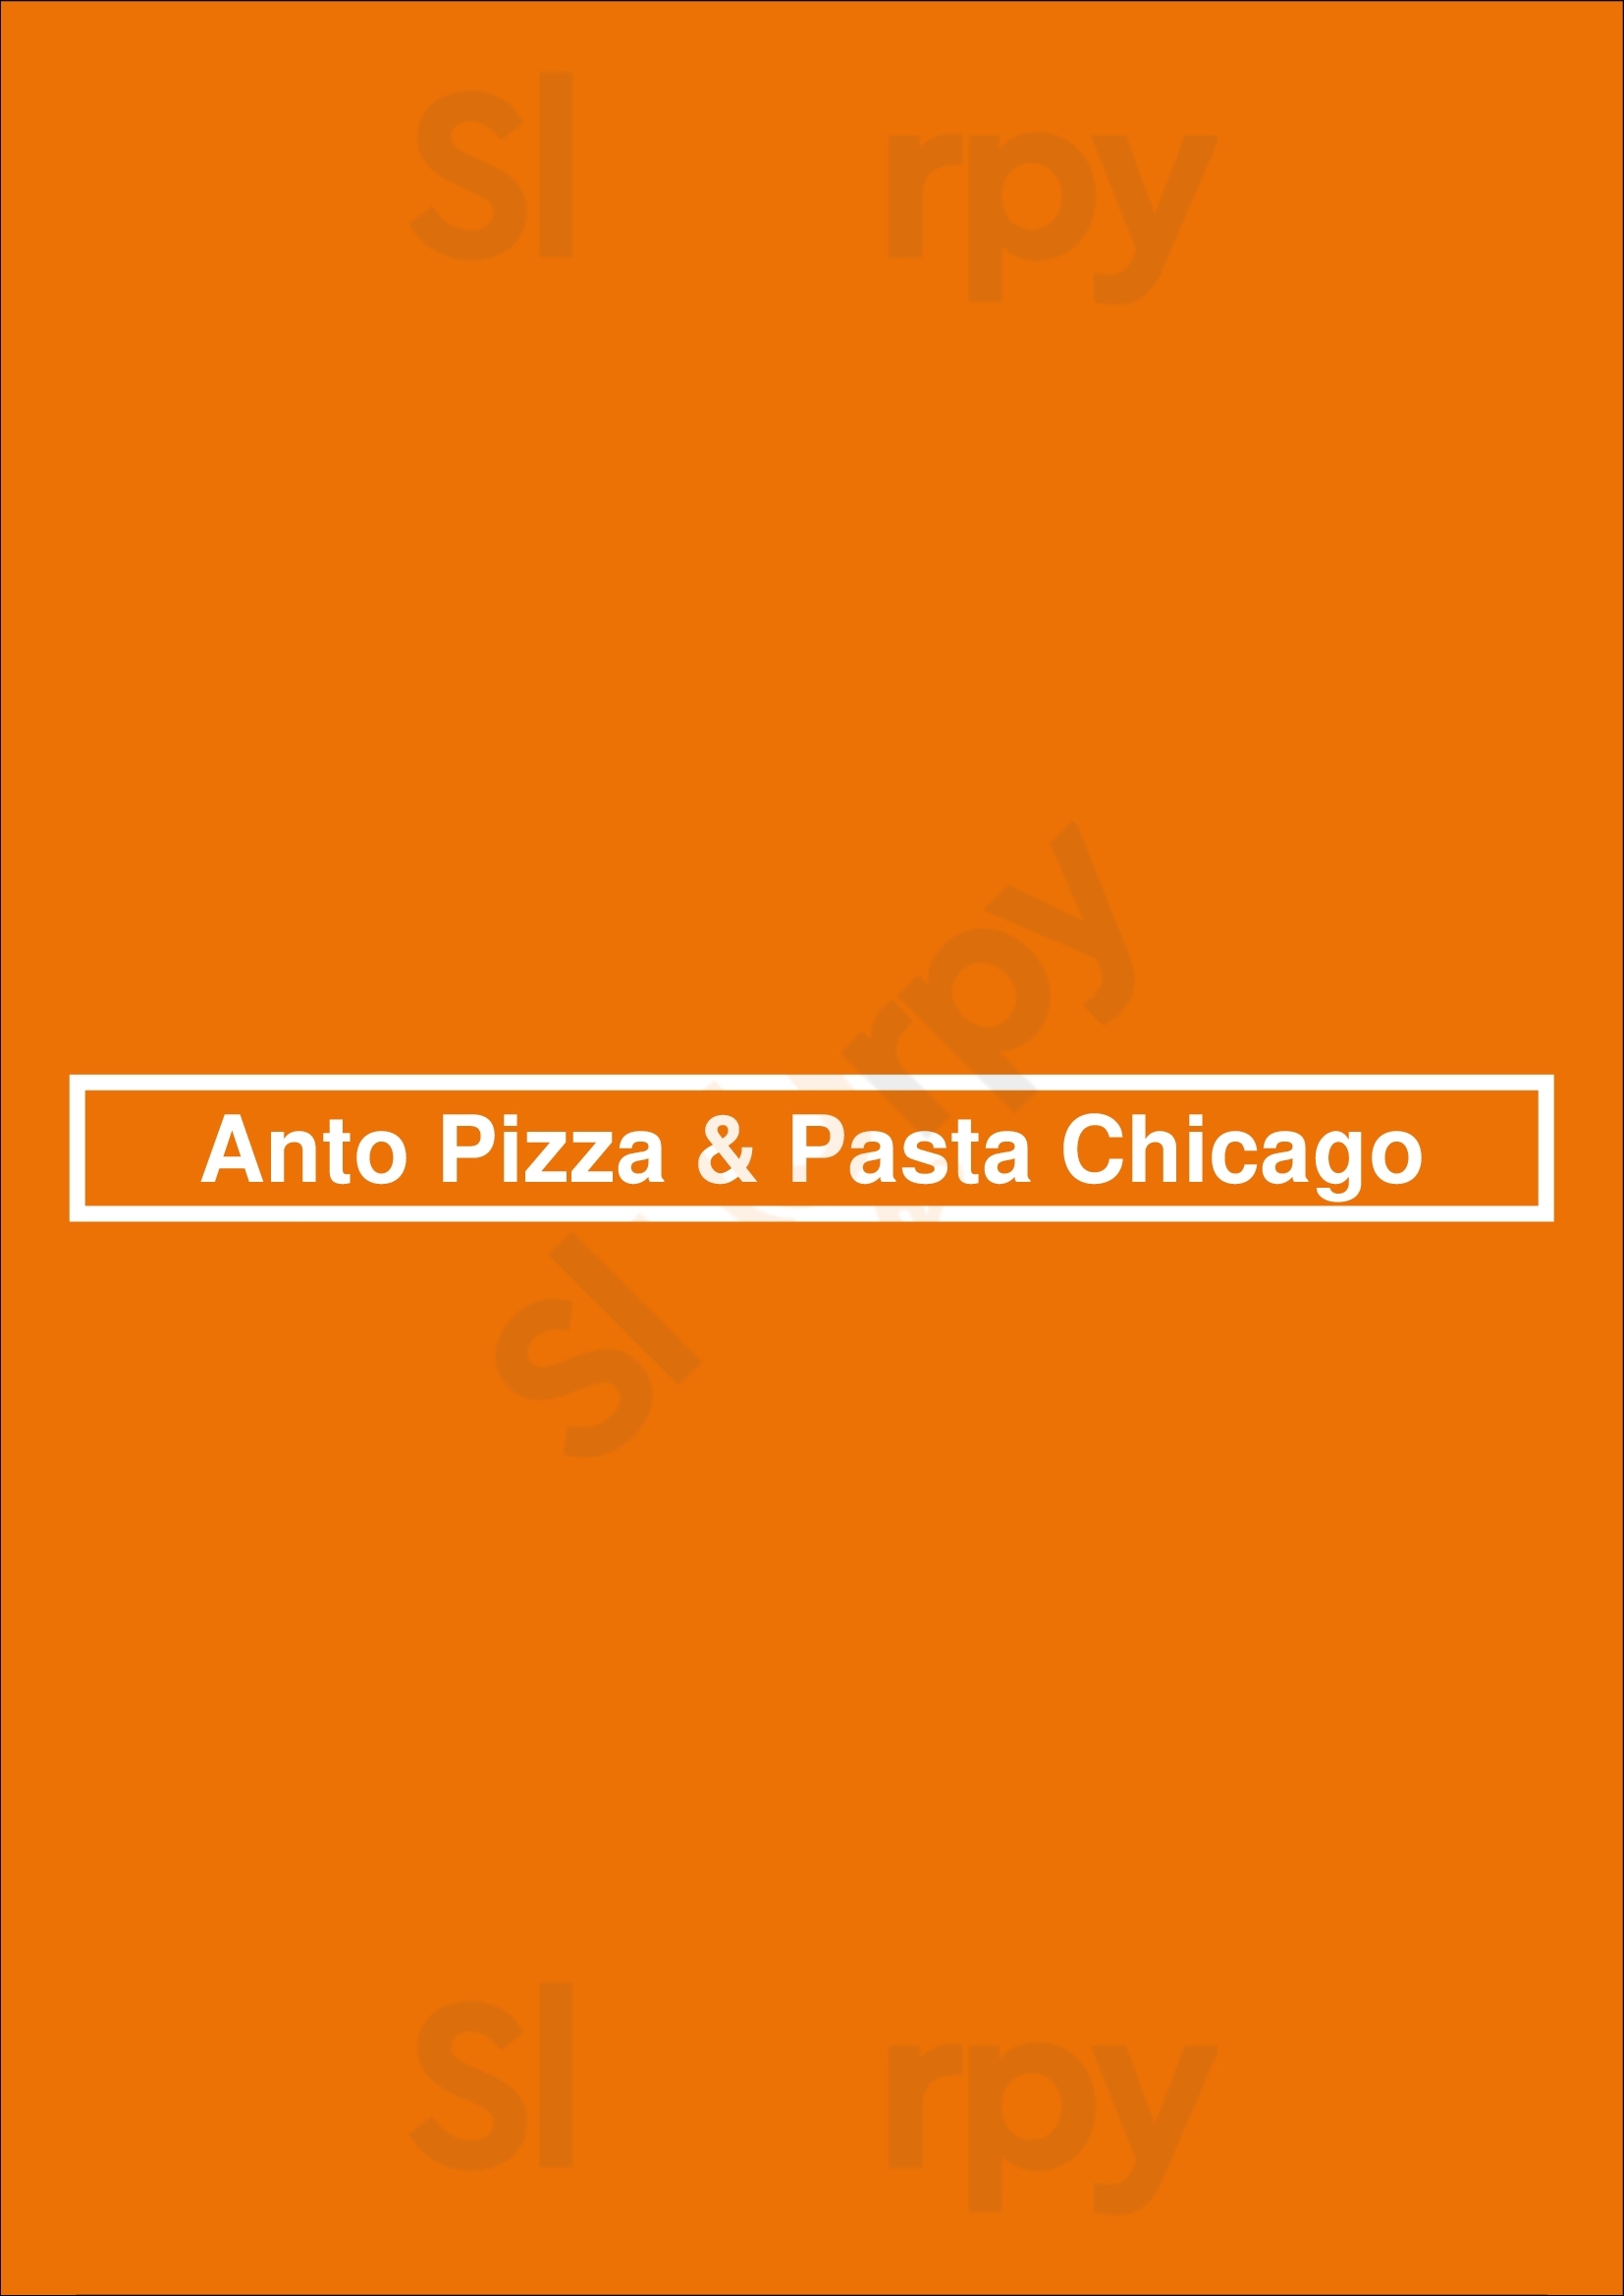 Anto Pizza & Pasta Chicago Chicago Menu - 1